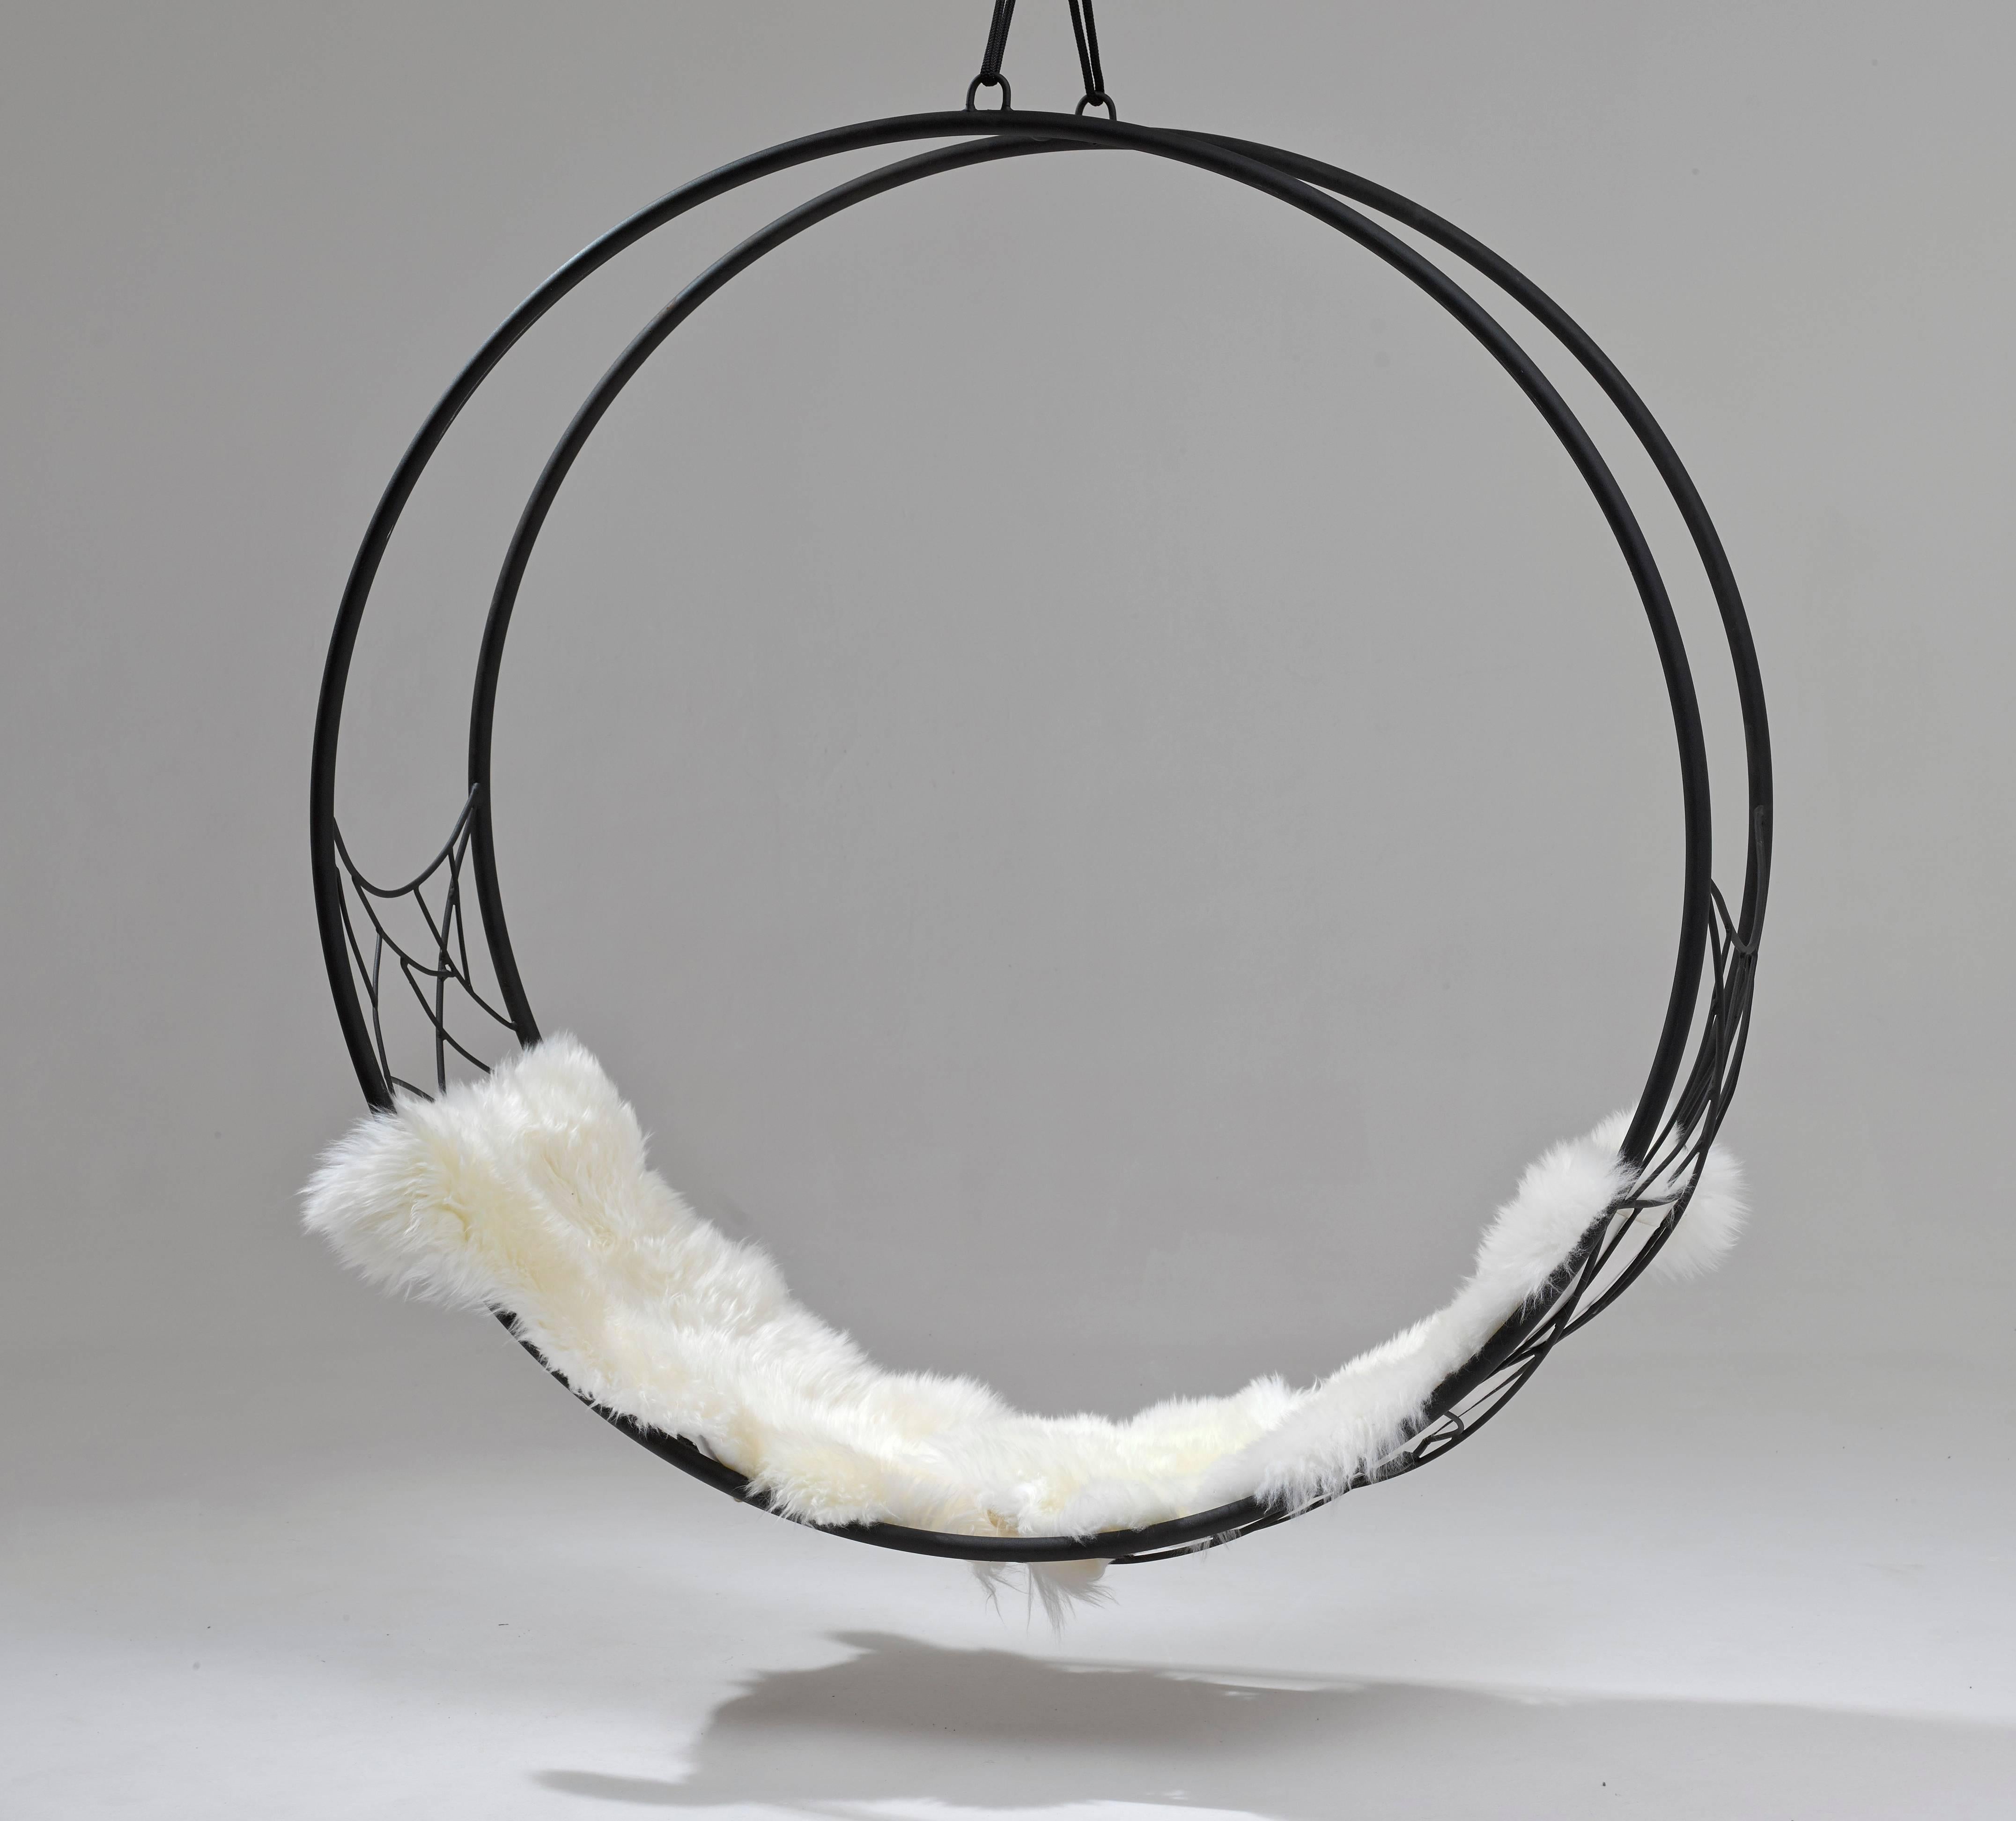 Acier The Moderns, Steele, Outdoor, Hanging Wheel Chair, Circular, Black, 21st Century (en anglais) en vente